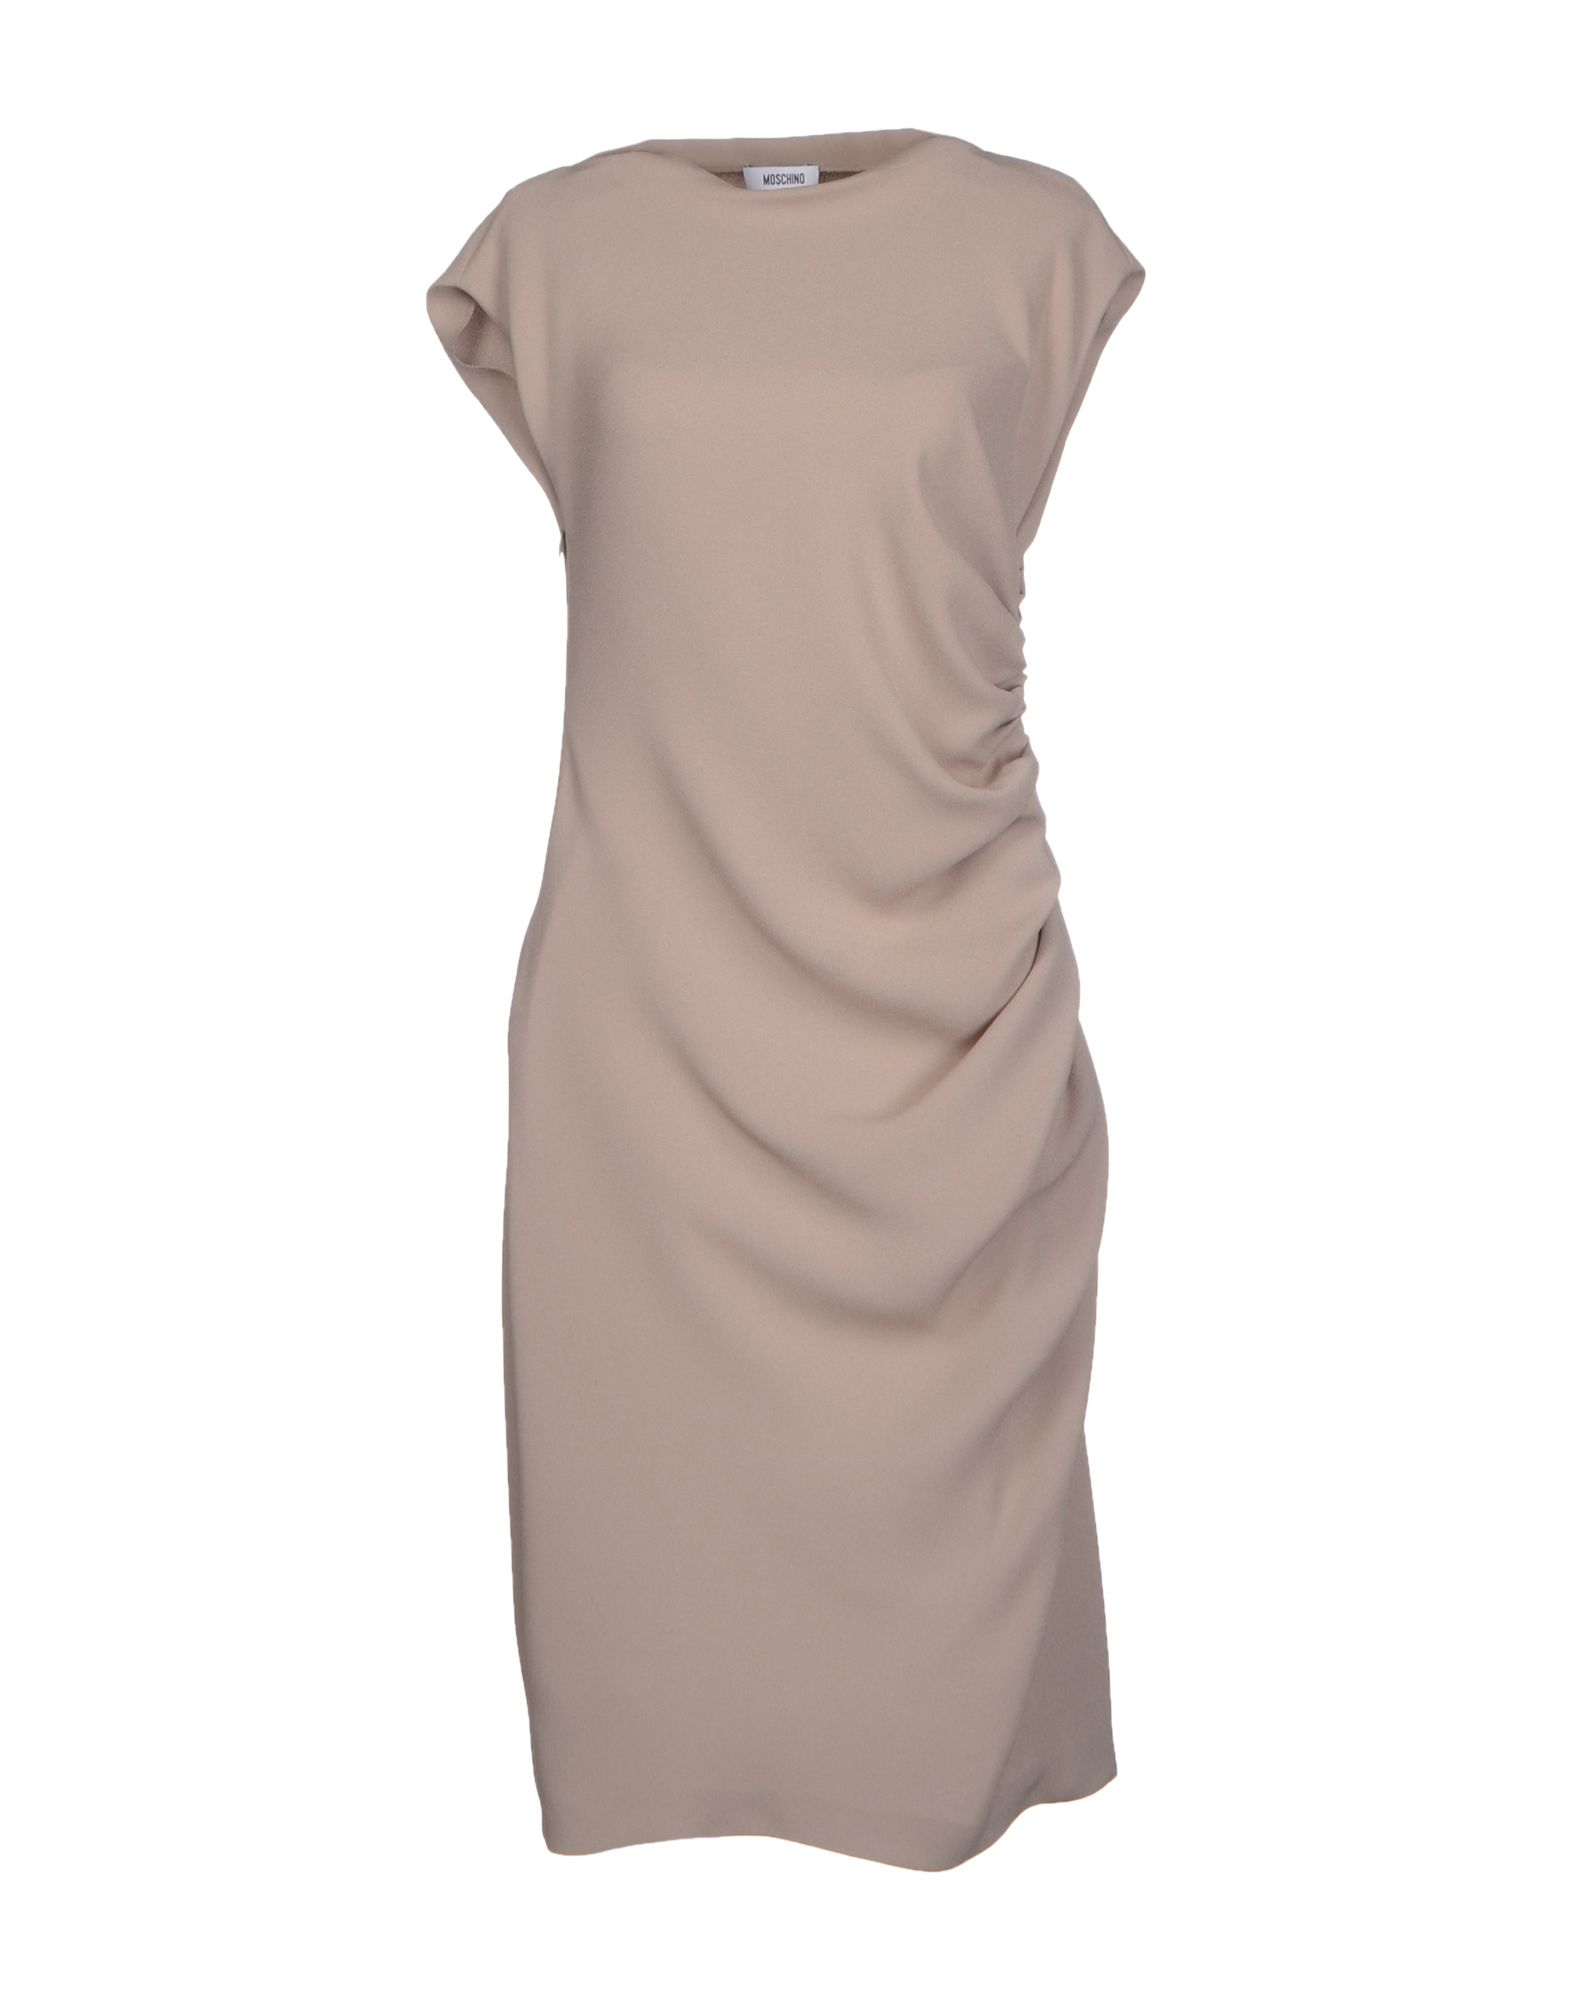 Moschino Knee-Length Dress in Gray (Light grey)